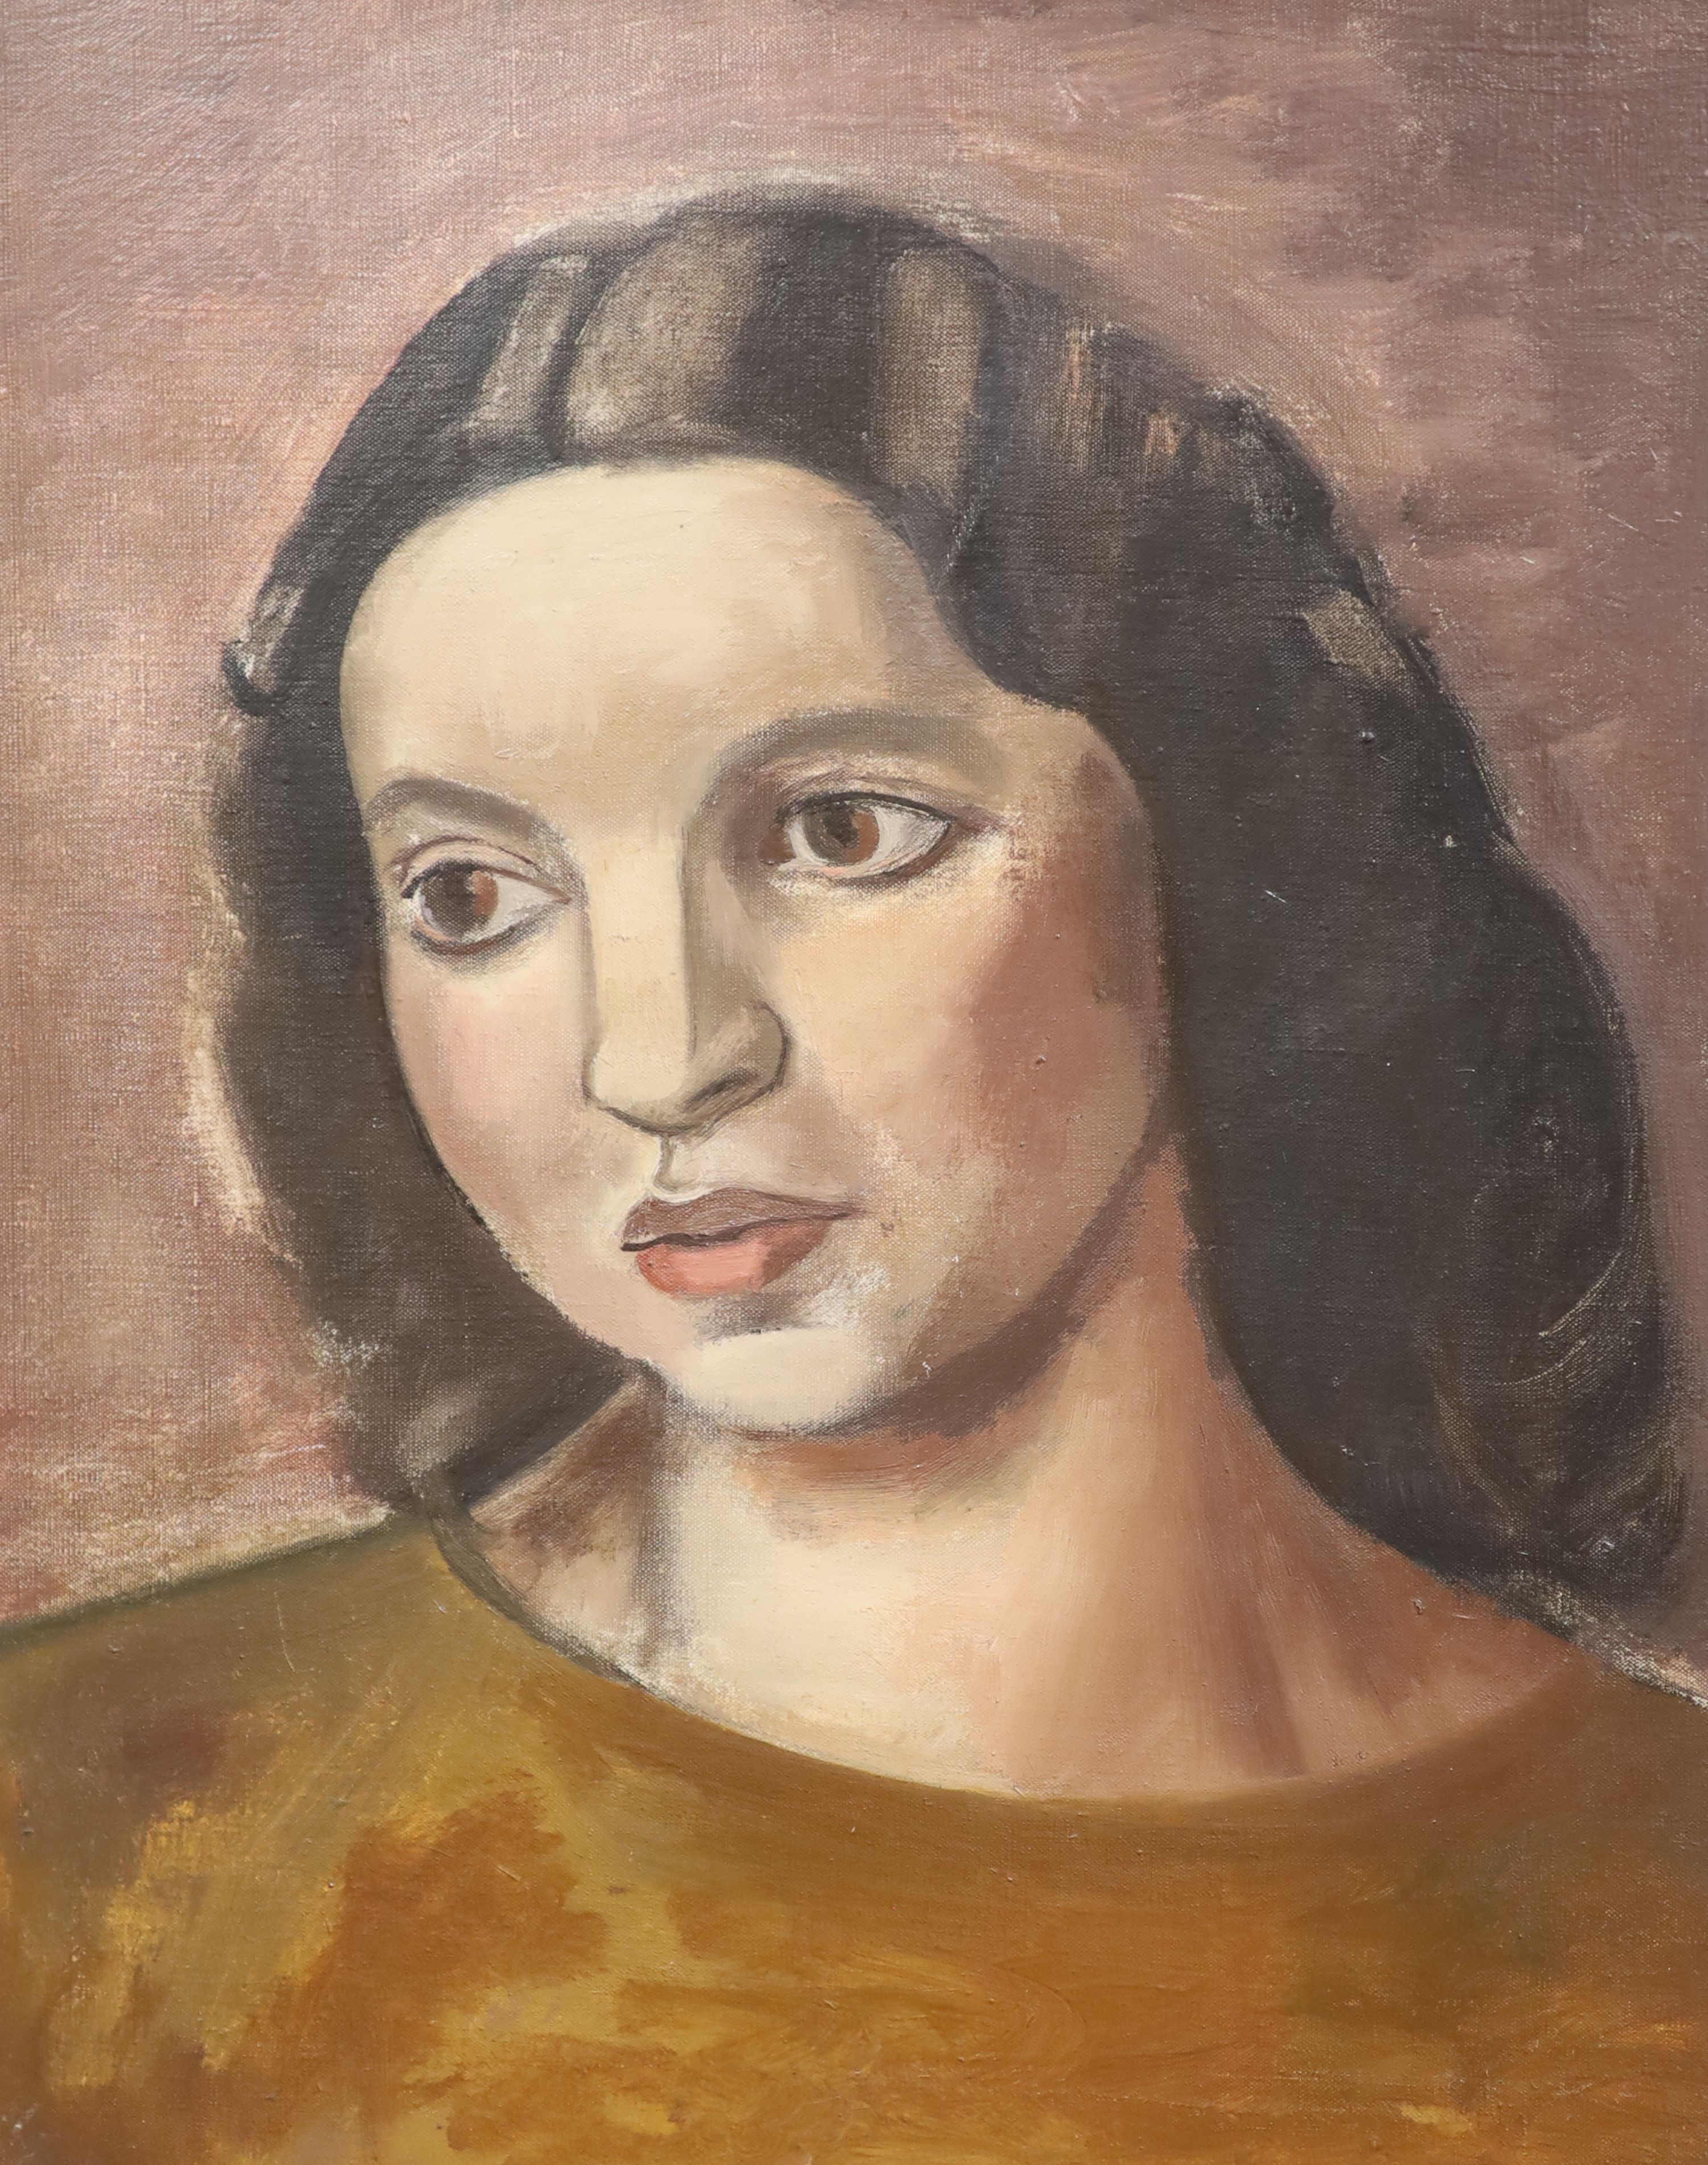 Bernard Meninsky (1891-1950), No.115 Rose Ellenby, oil on canvas, 50 x 40cm